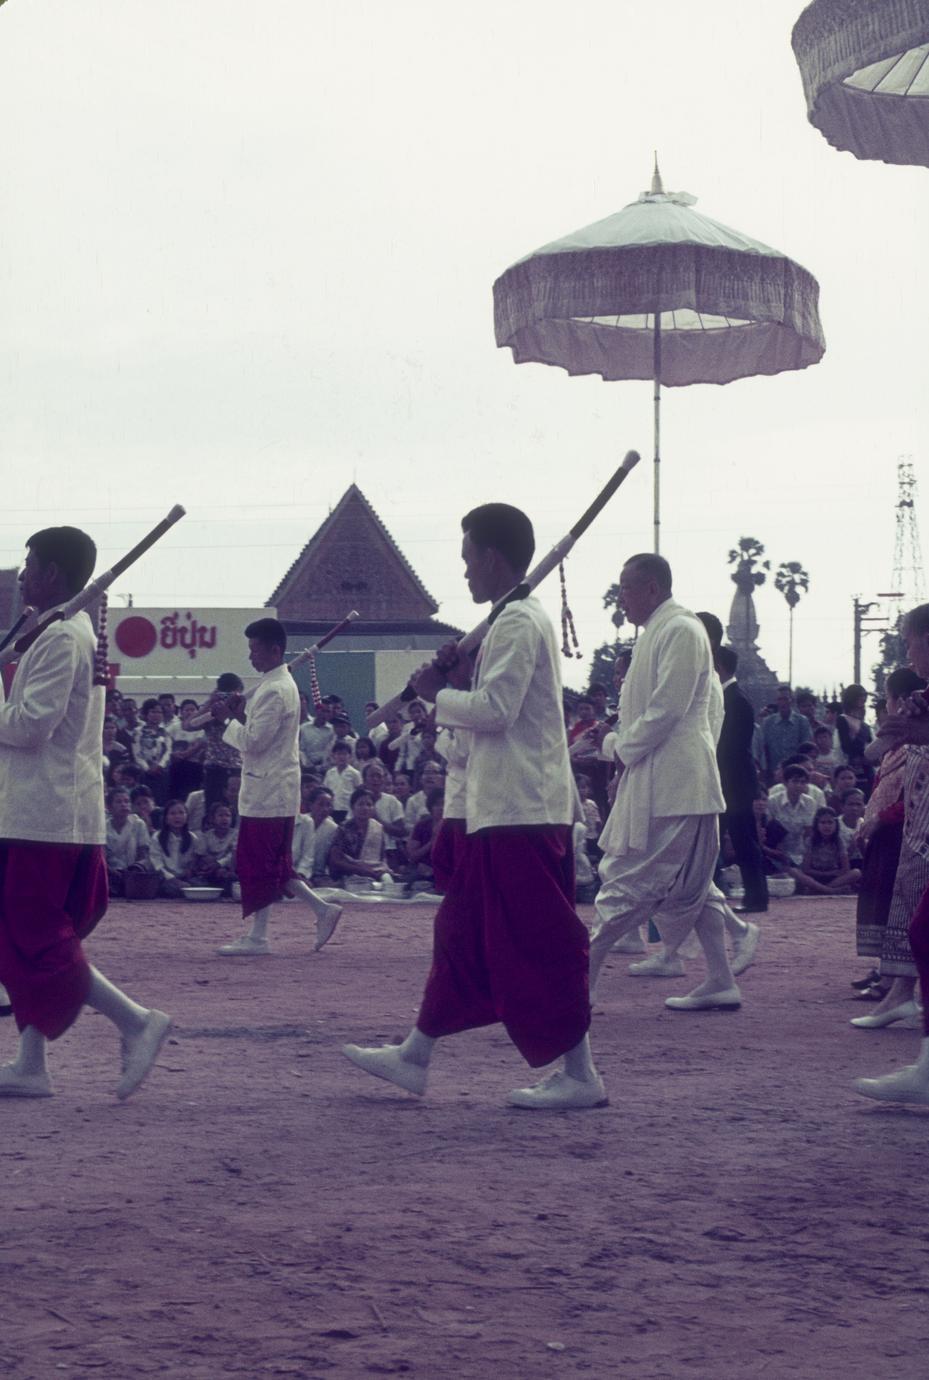 King of Laos at festival